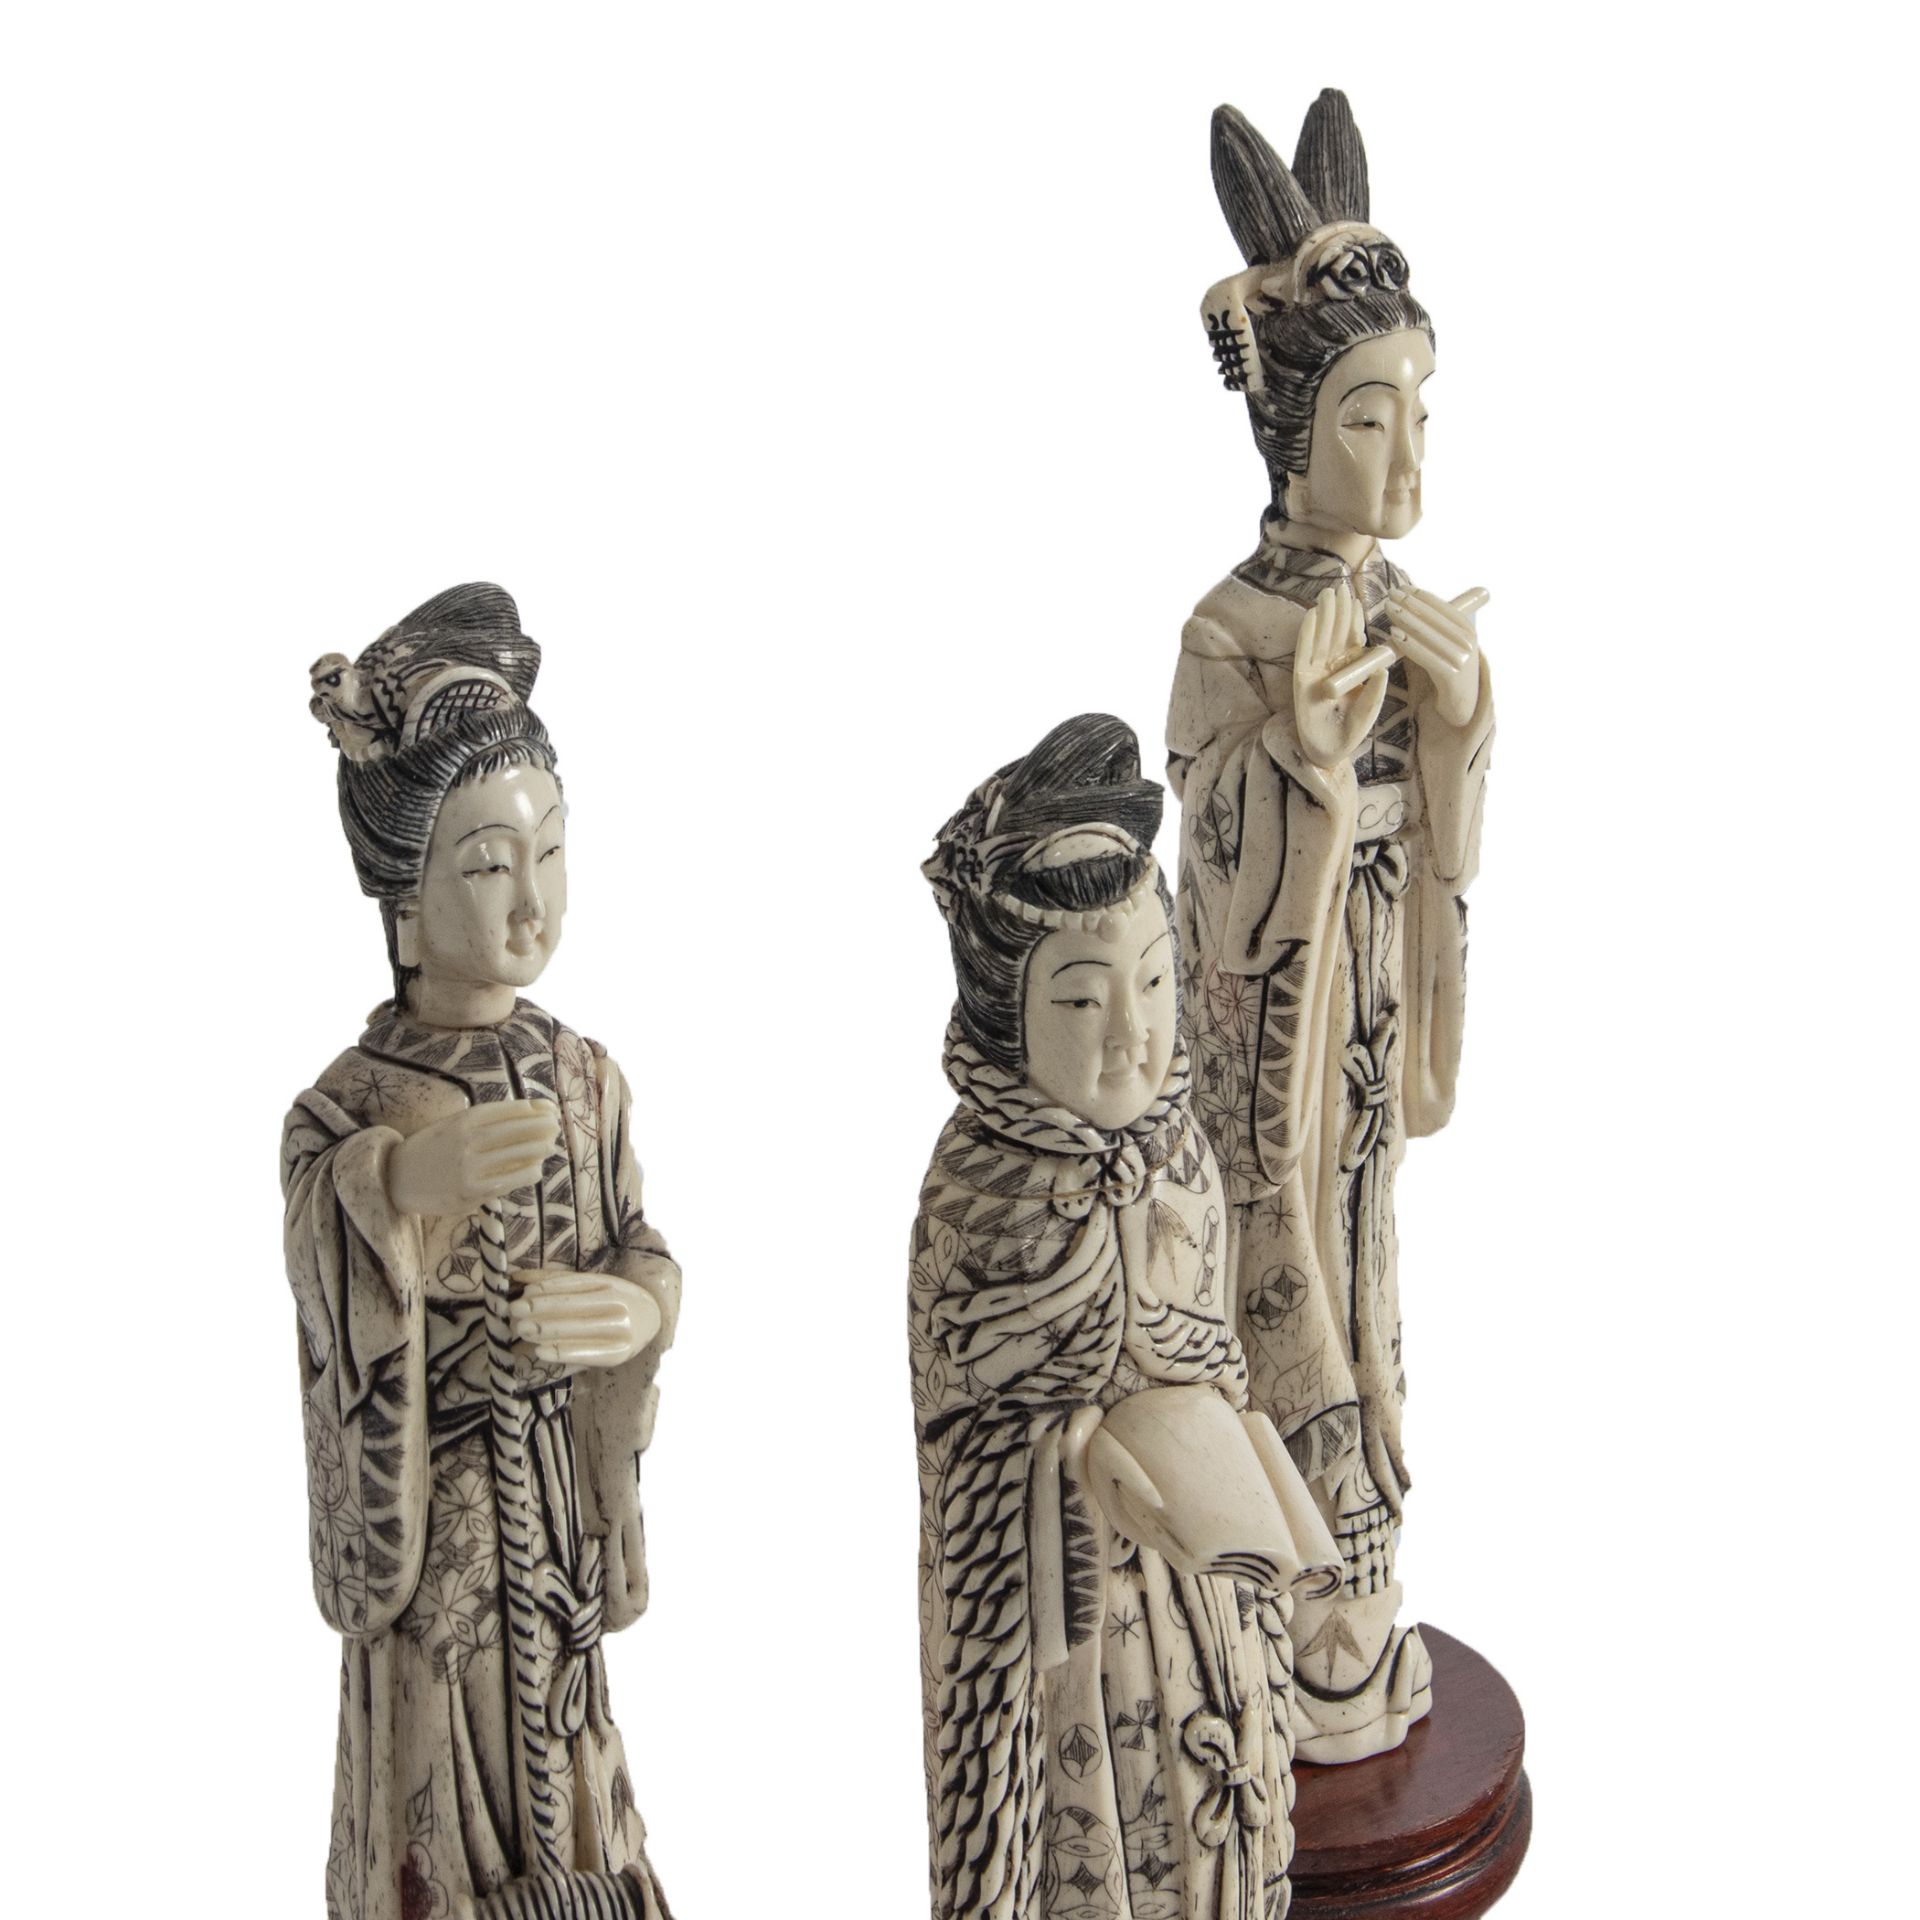 Carved bronce geishas. China, 20th century. - Image 2 of 3